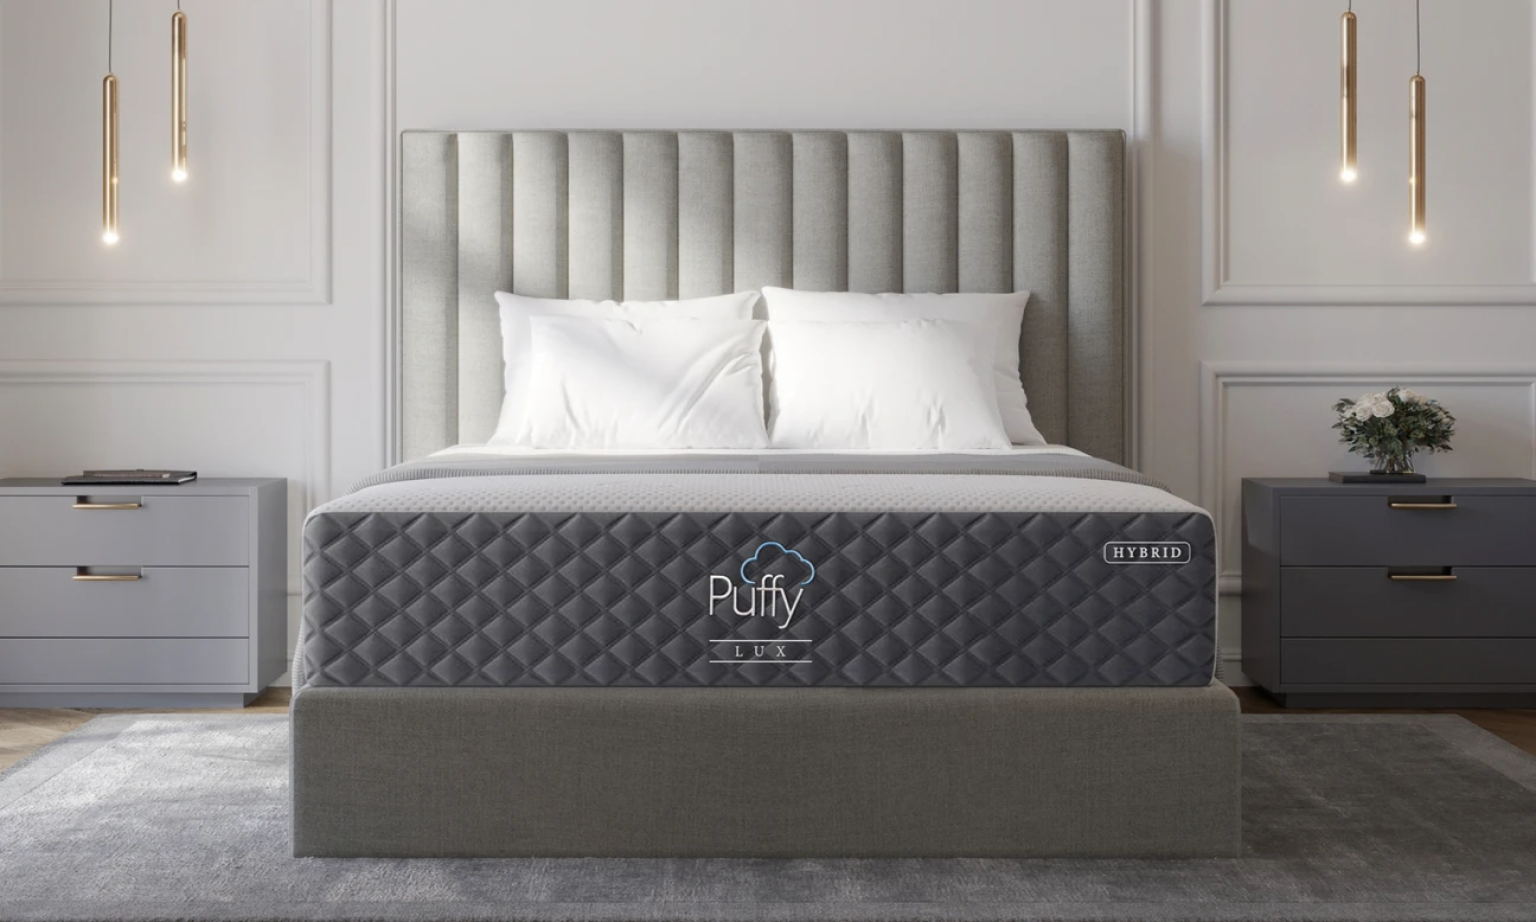 puffy lux mattress negative reviews